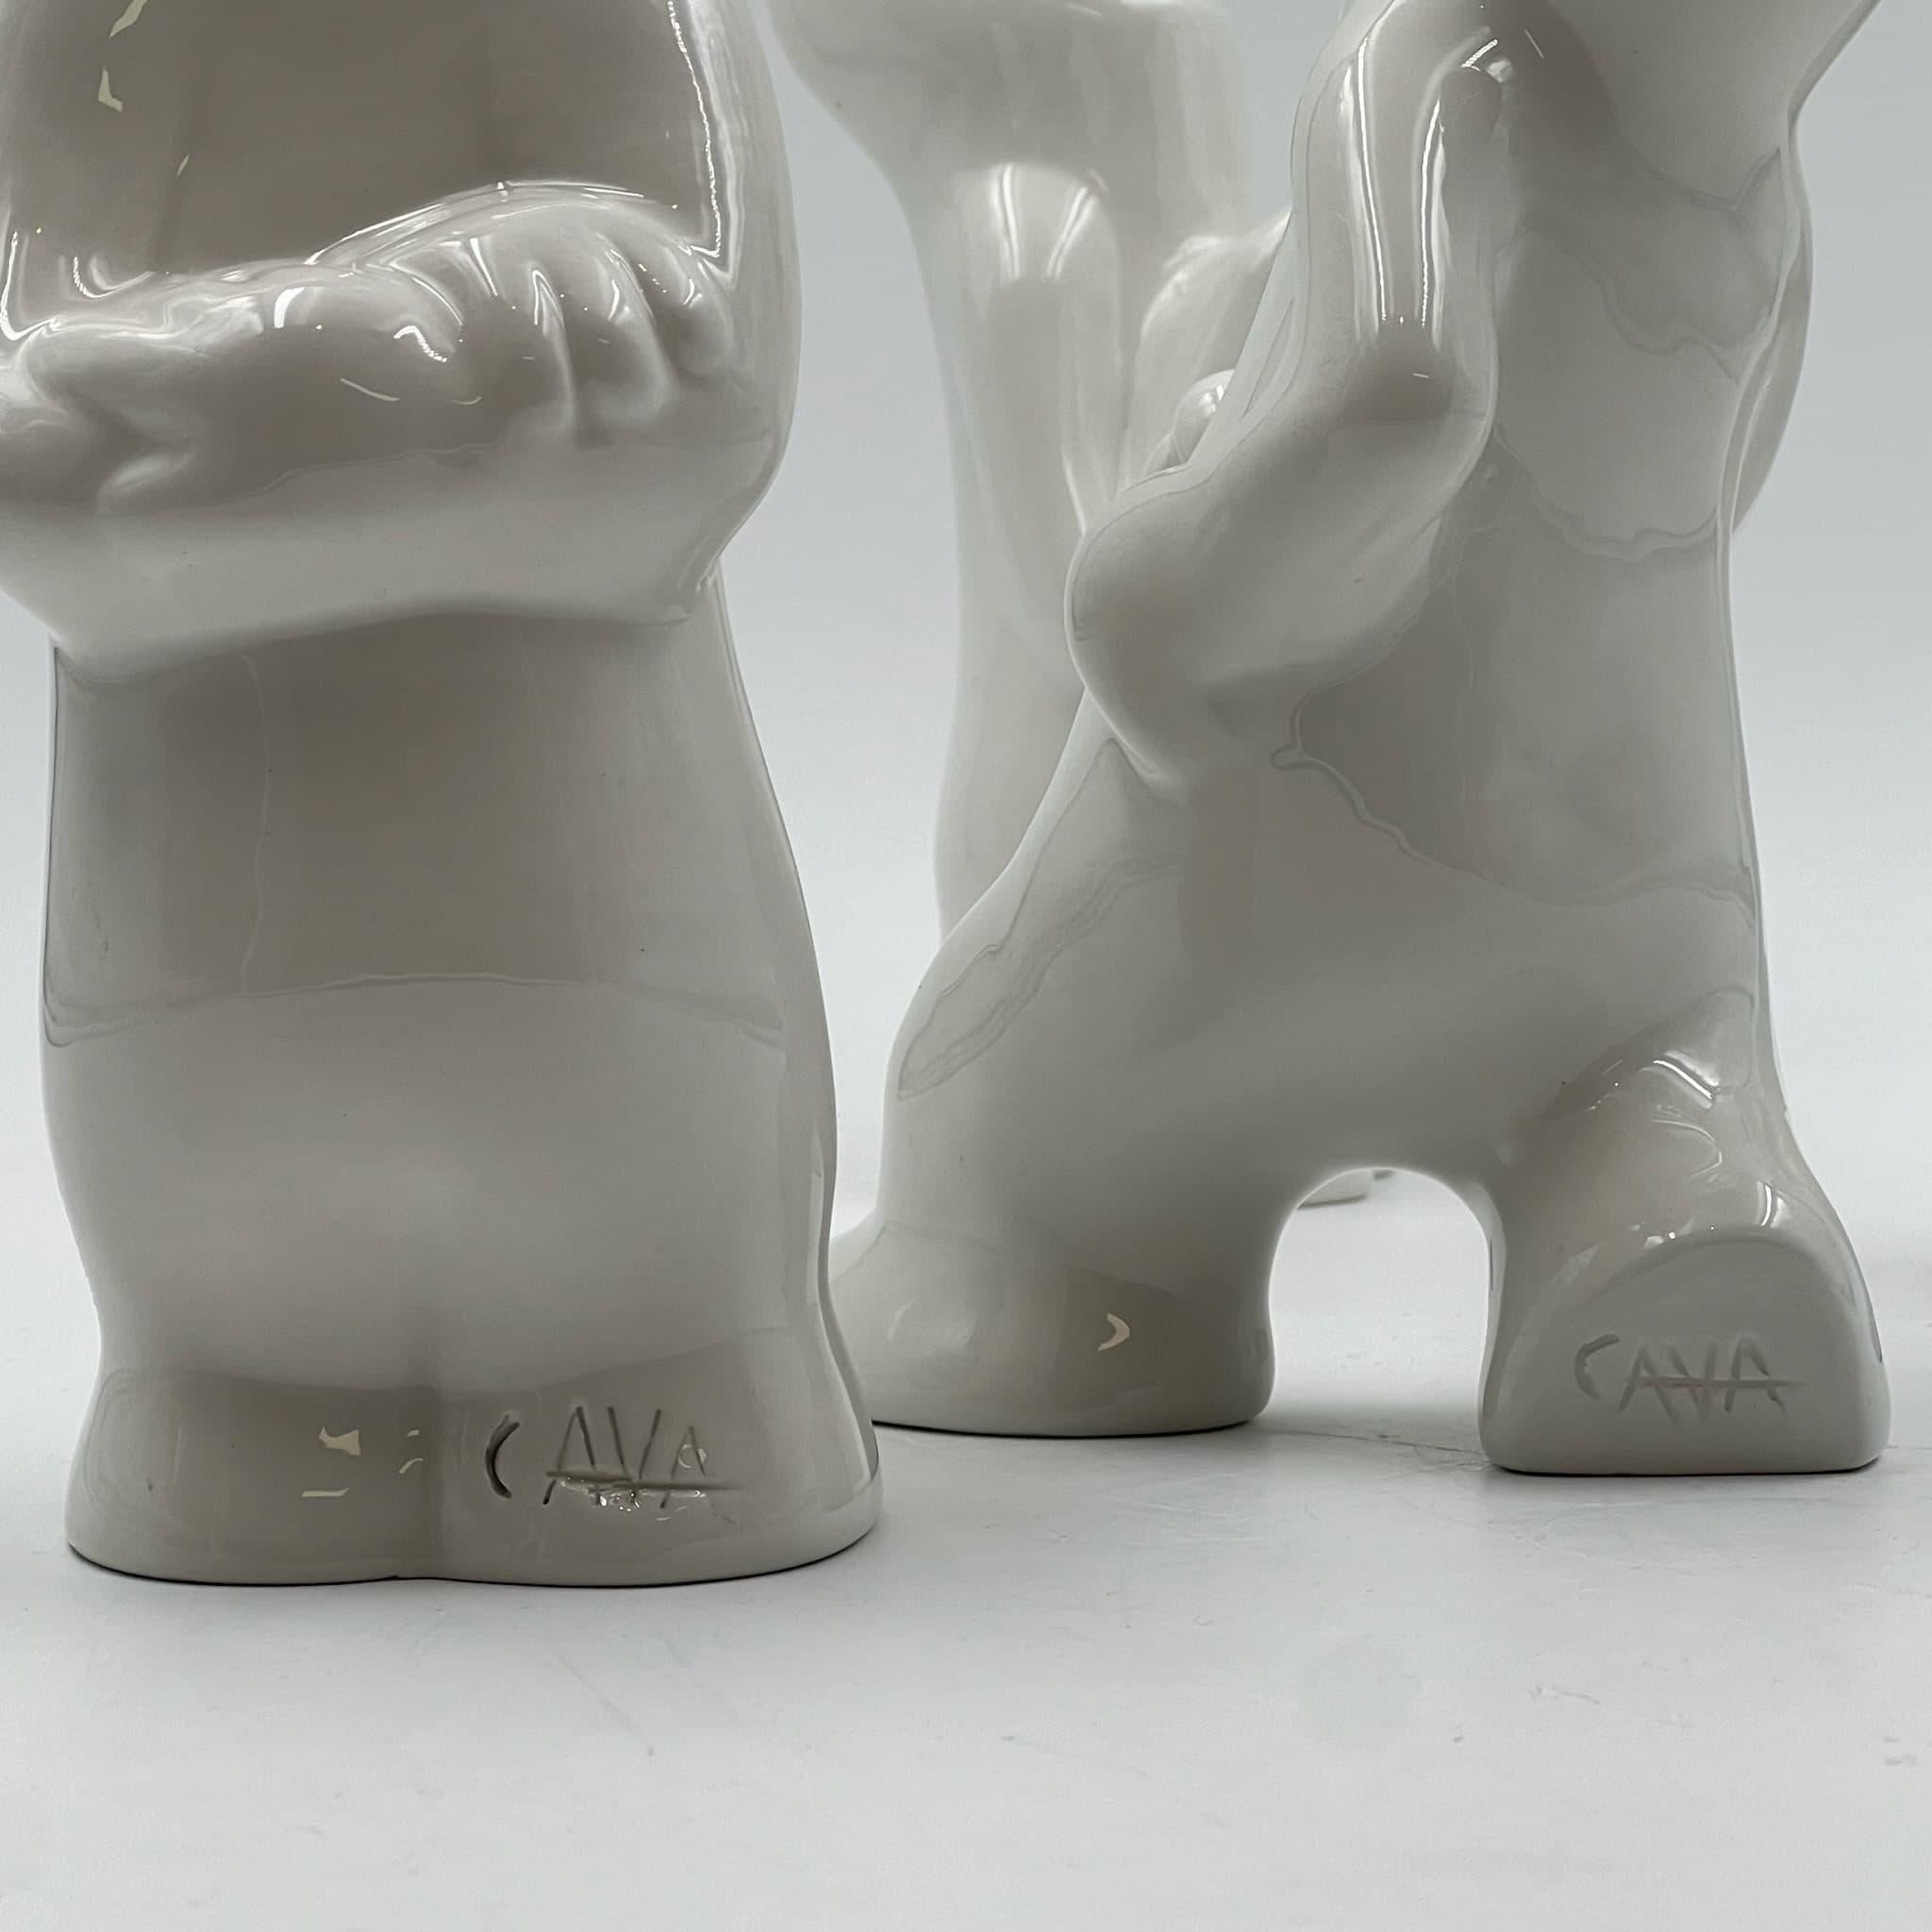 Osvaldo Cavandoli 'La Linea' - Pop Art 1960s - Set of Four Ceramic Figurines 4